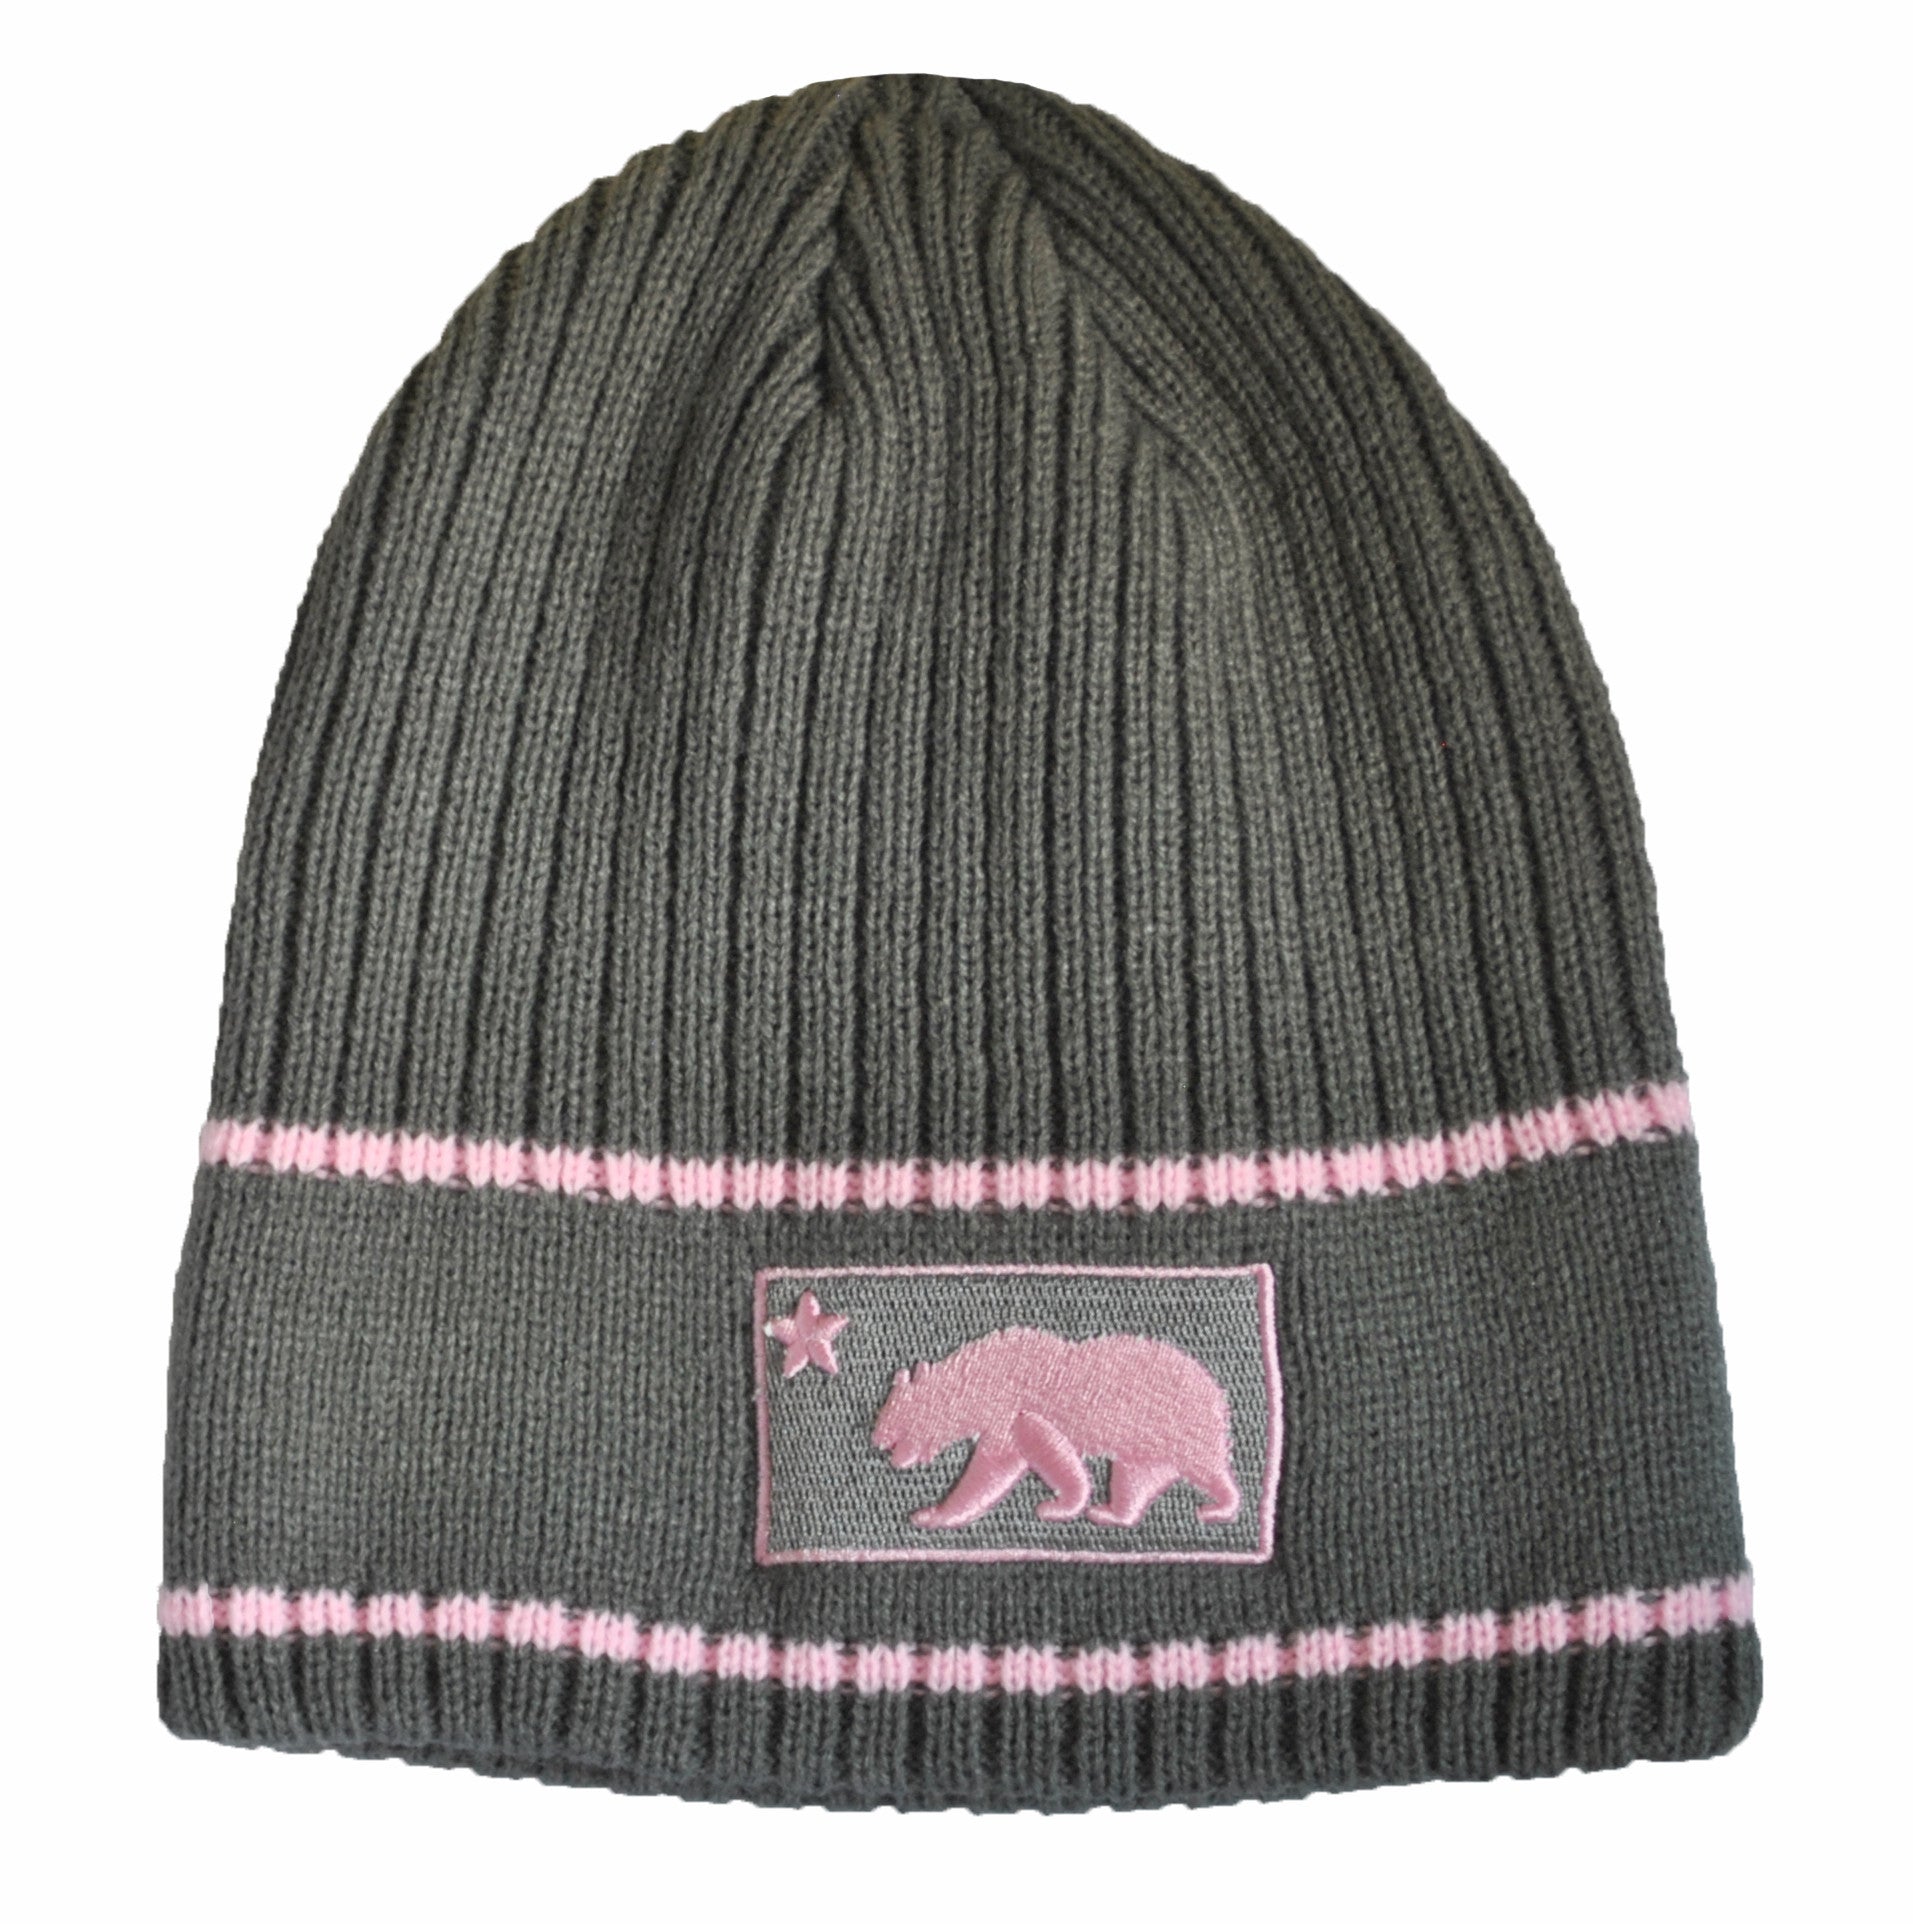 Women's Cal Bear Beanie - Grey/Pink